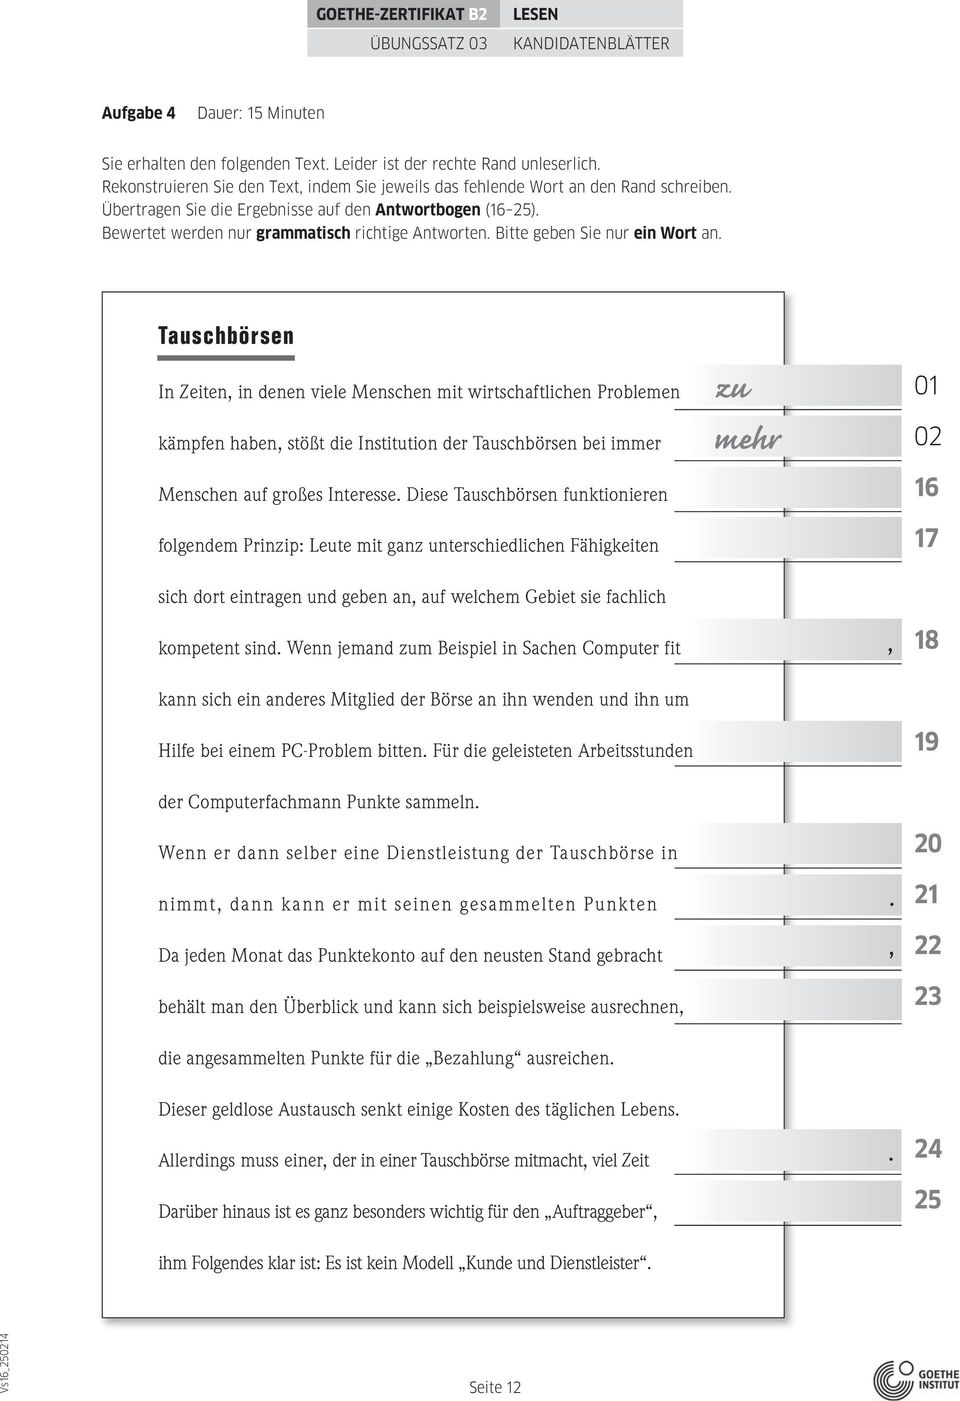 Goethe Zertifikat B2 Ubungssatz 03 Kandidatenblatter Pruferblatter Pdf Kostenfreier Download